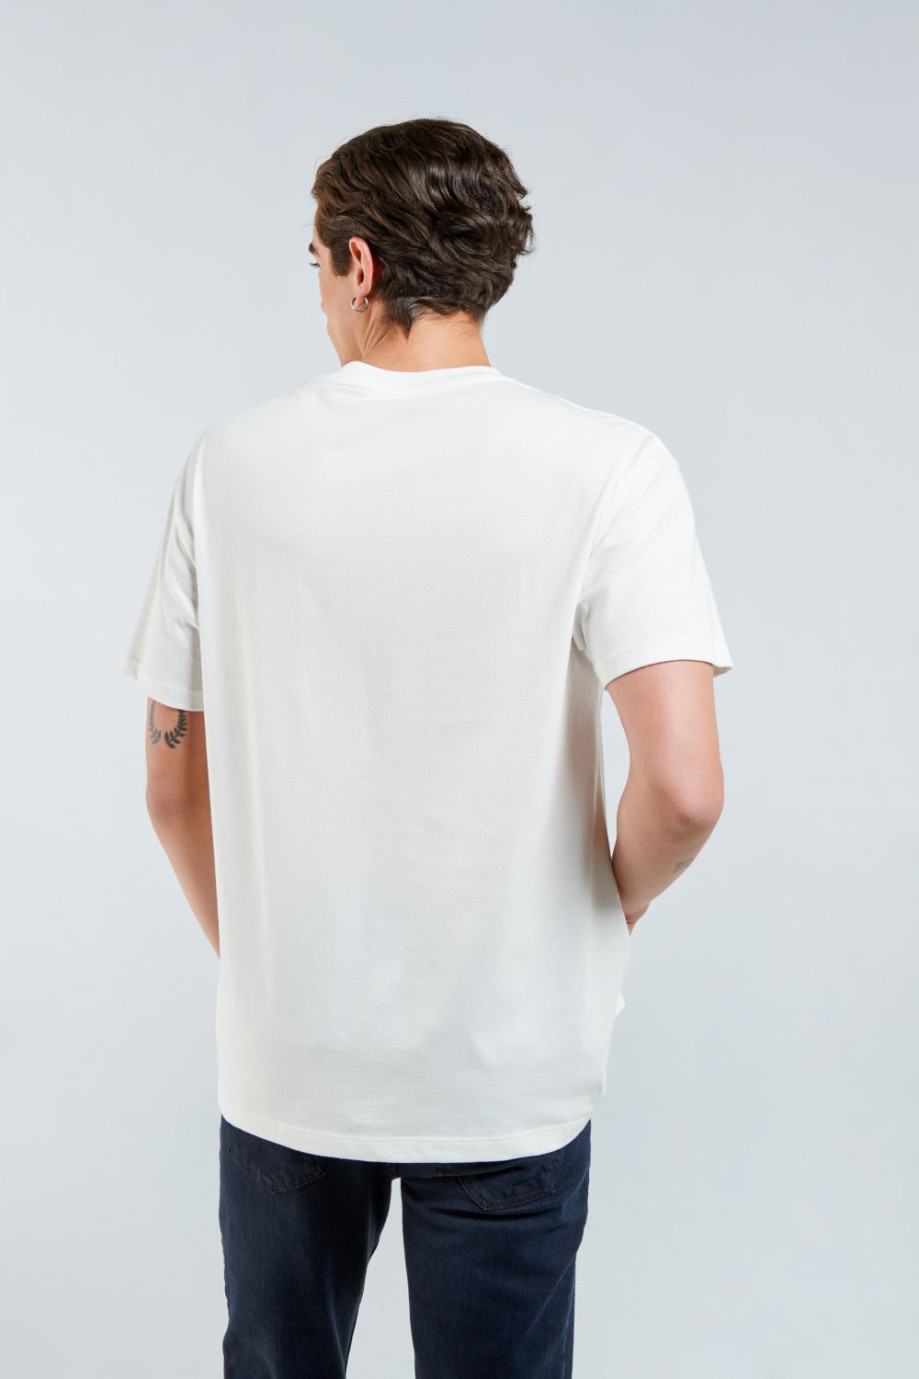 Camiseta manga corta blanca con estampado en frente estilo College.